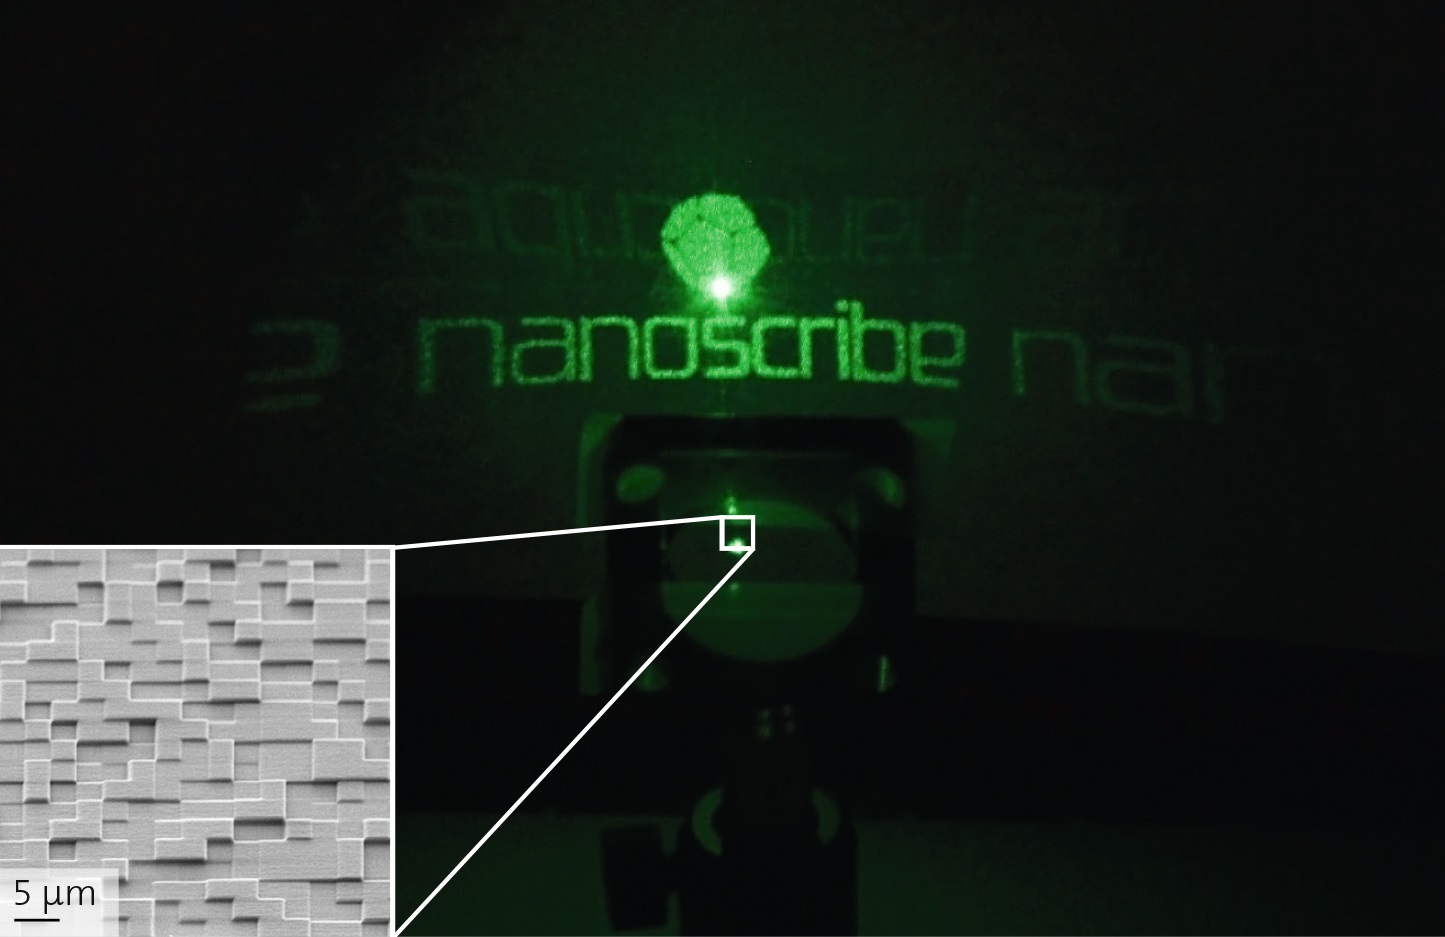 Nanoscribe DOE